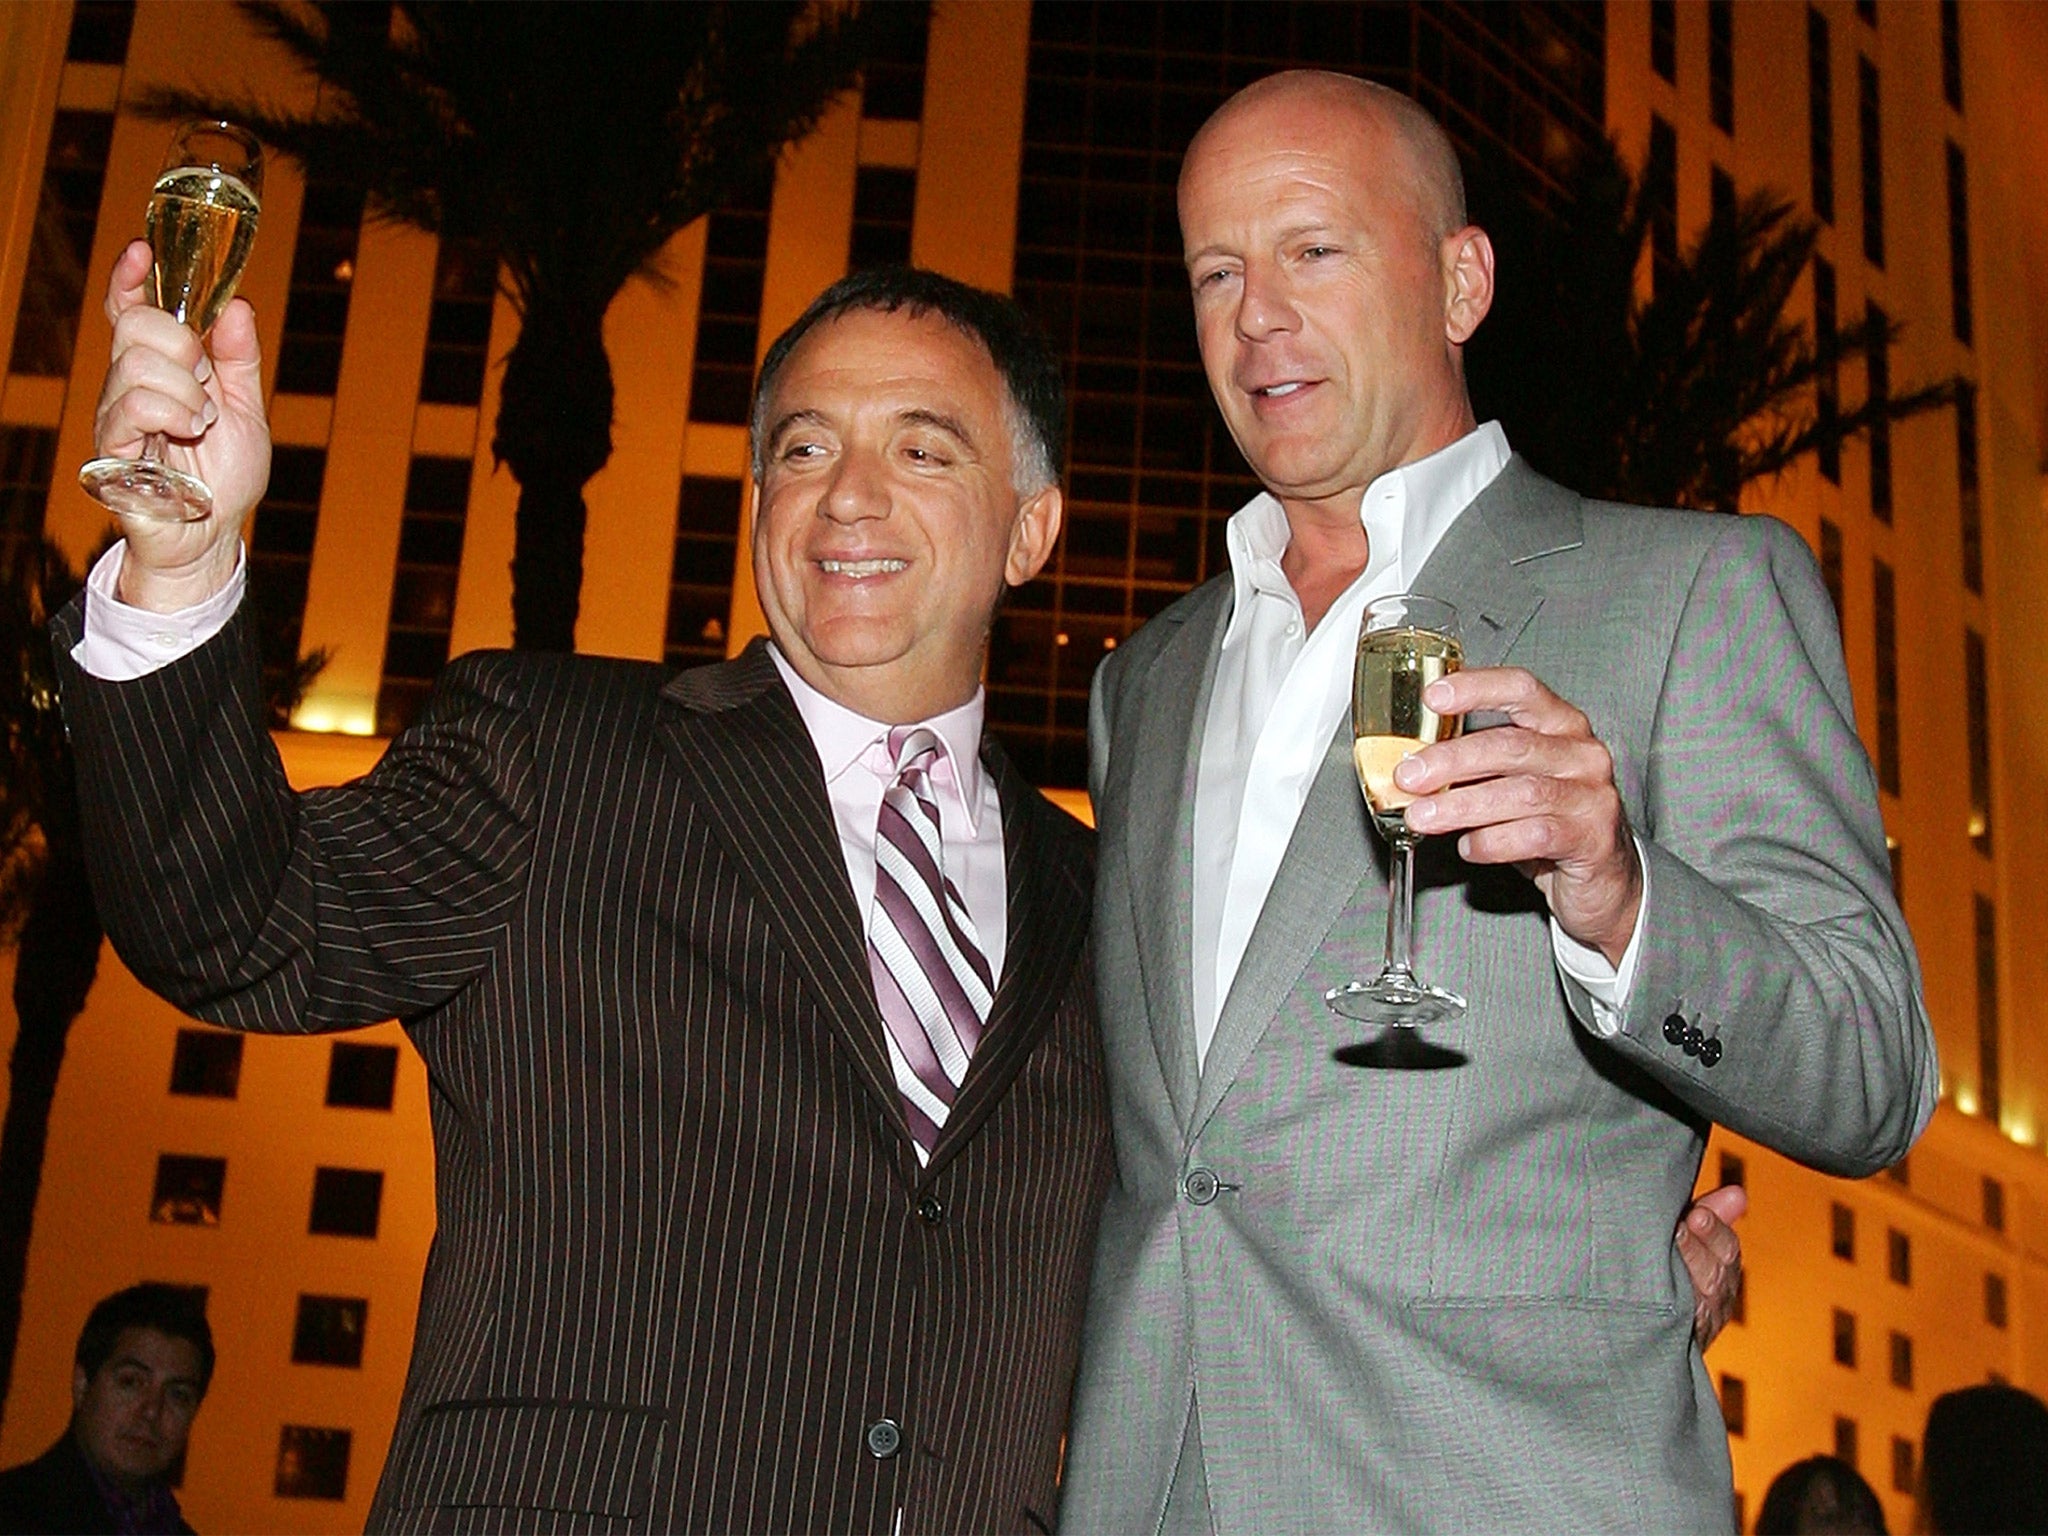 Robert Earl with Bruce Willis in Las Vegas, in 2007